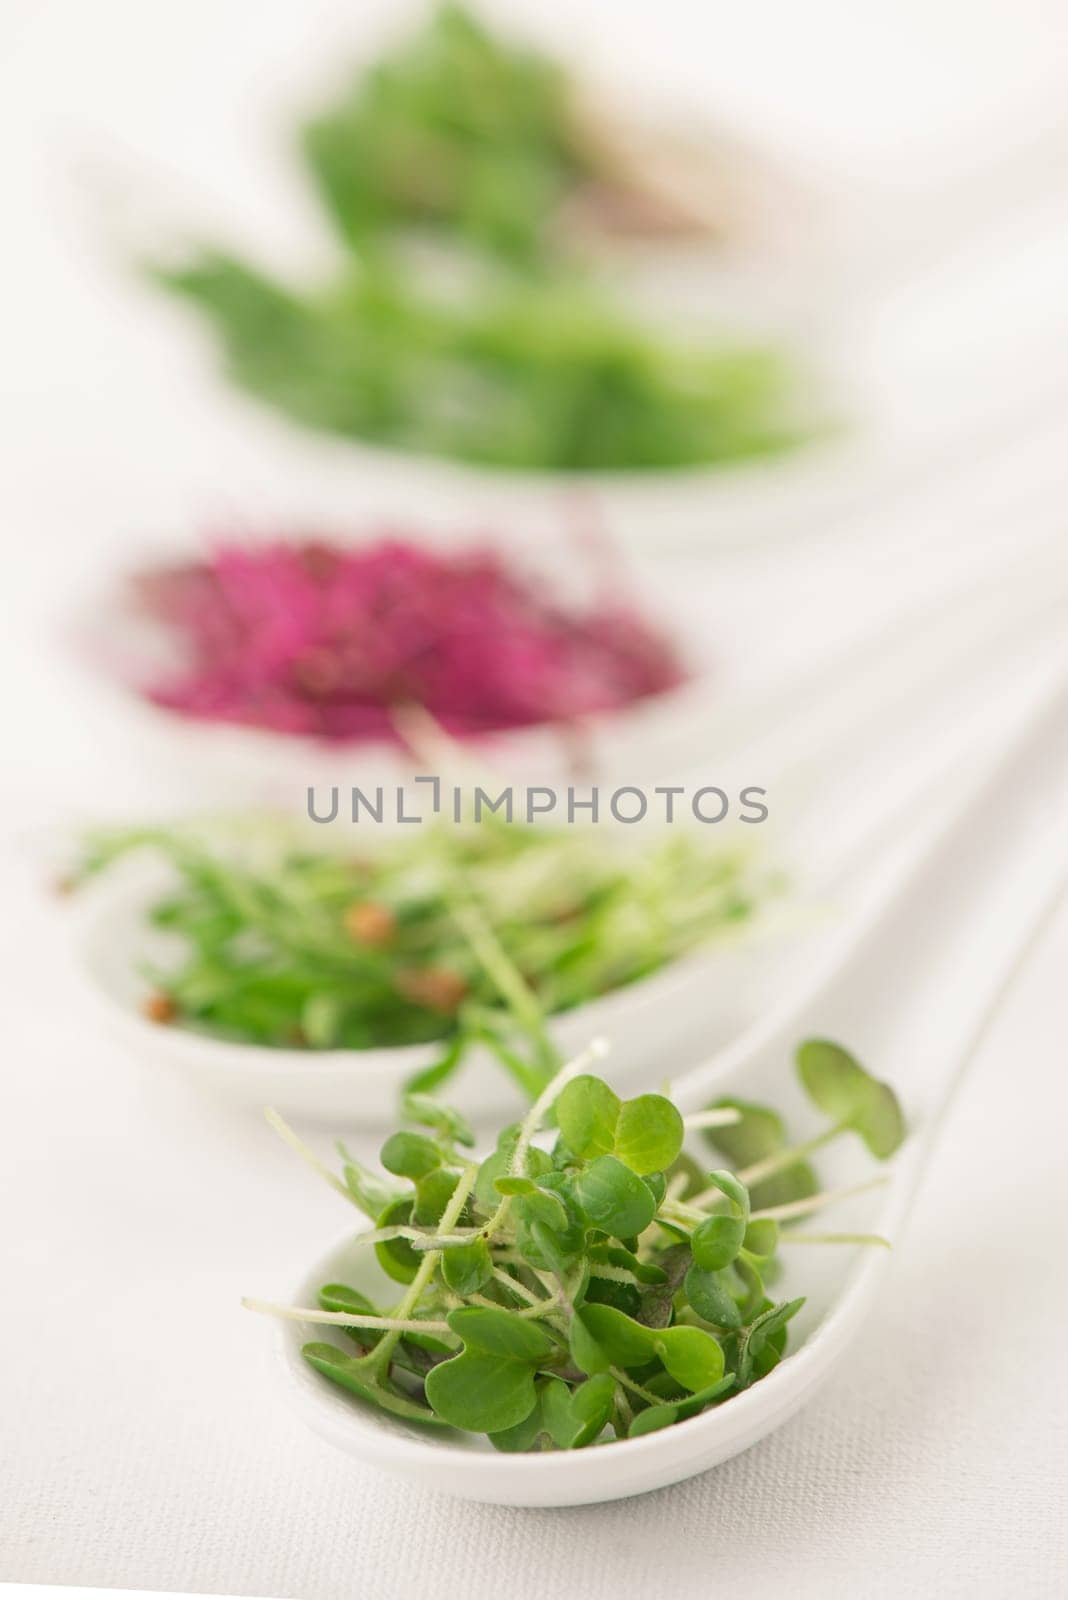 the cultivation of microgreens - red amaranth, mustard, arugula, peas, cilantro on a white